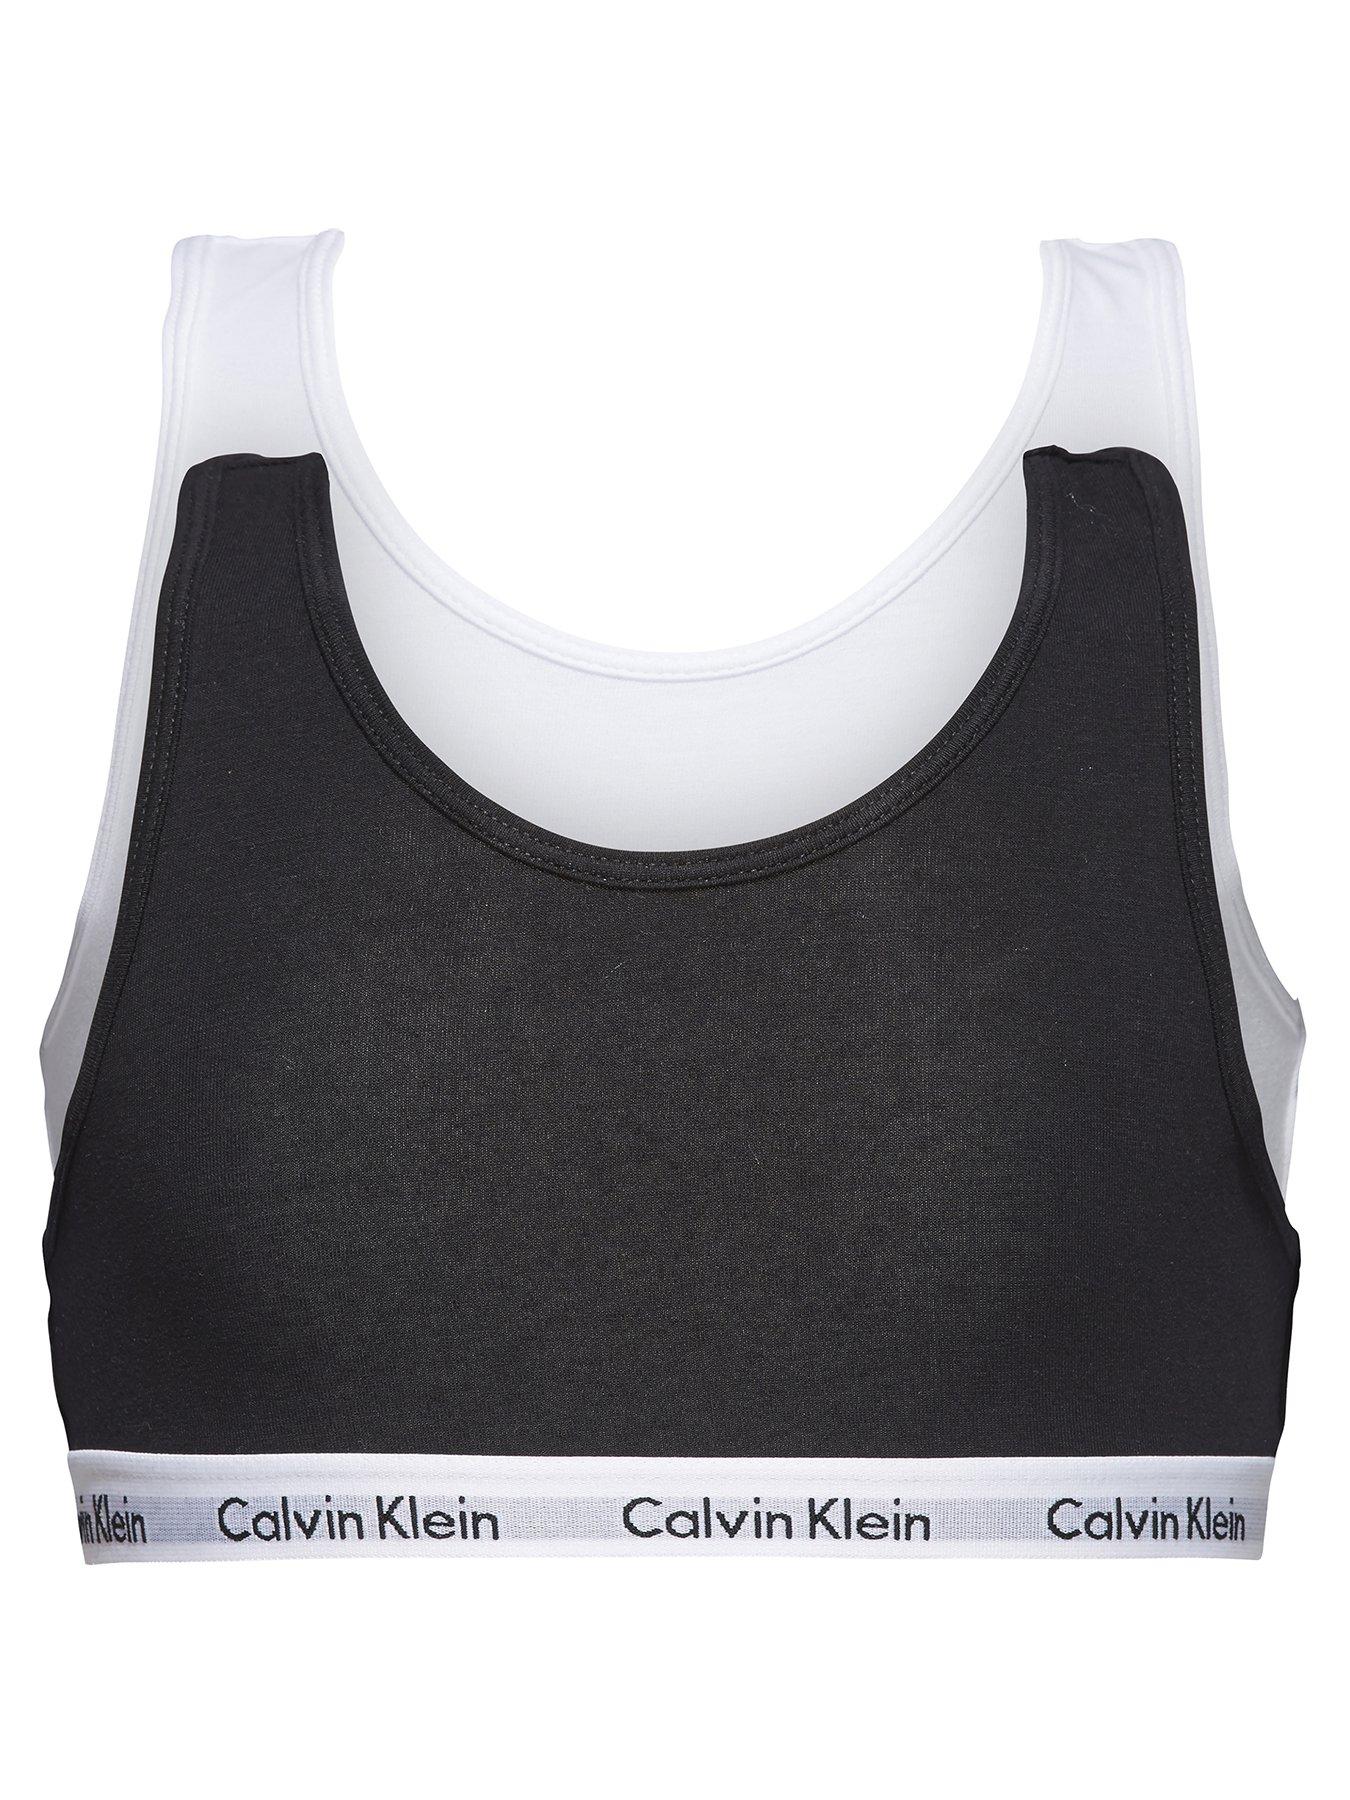 Women's Calvin Klein T-Shirt Bras